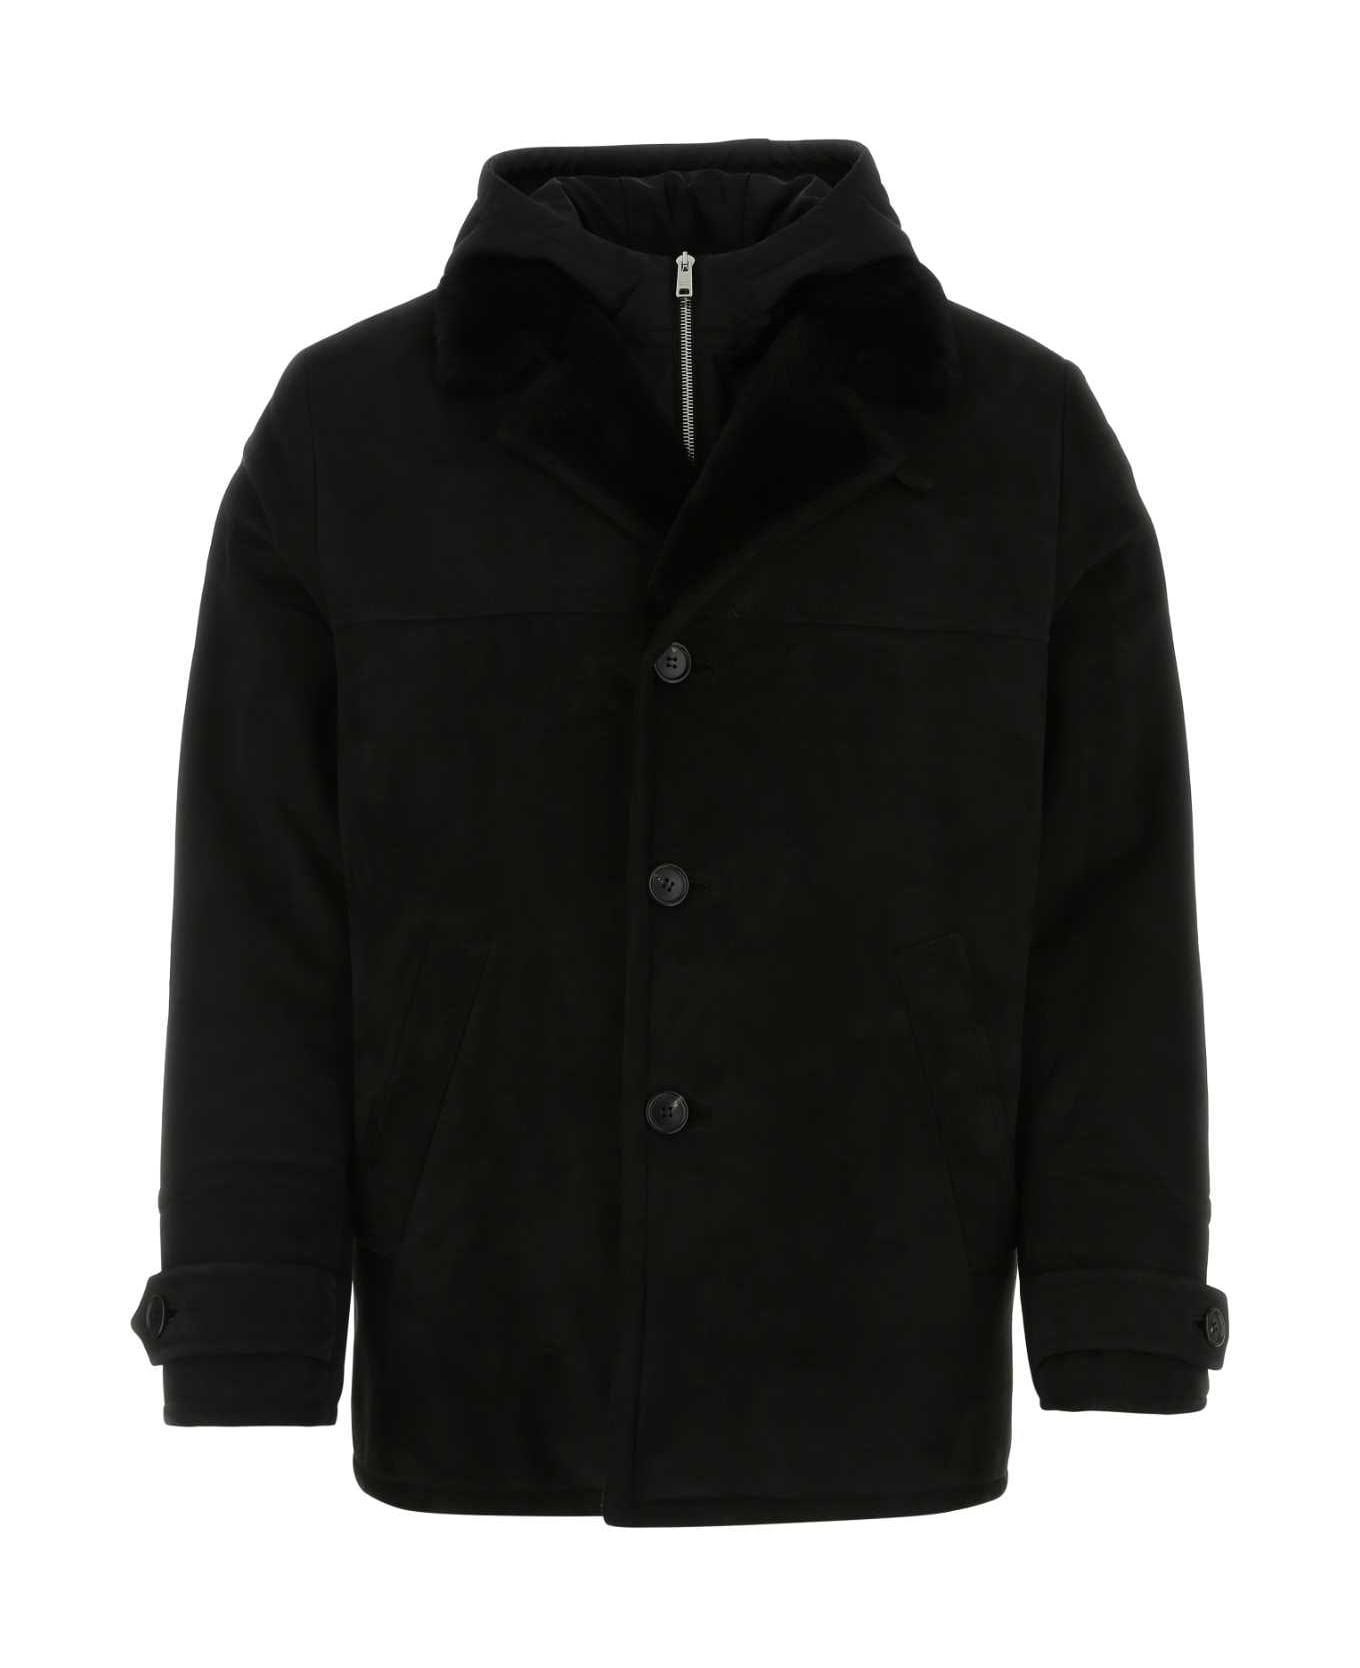 Prada Black Shearling Jacket - NERO ジャケット